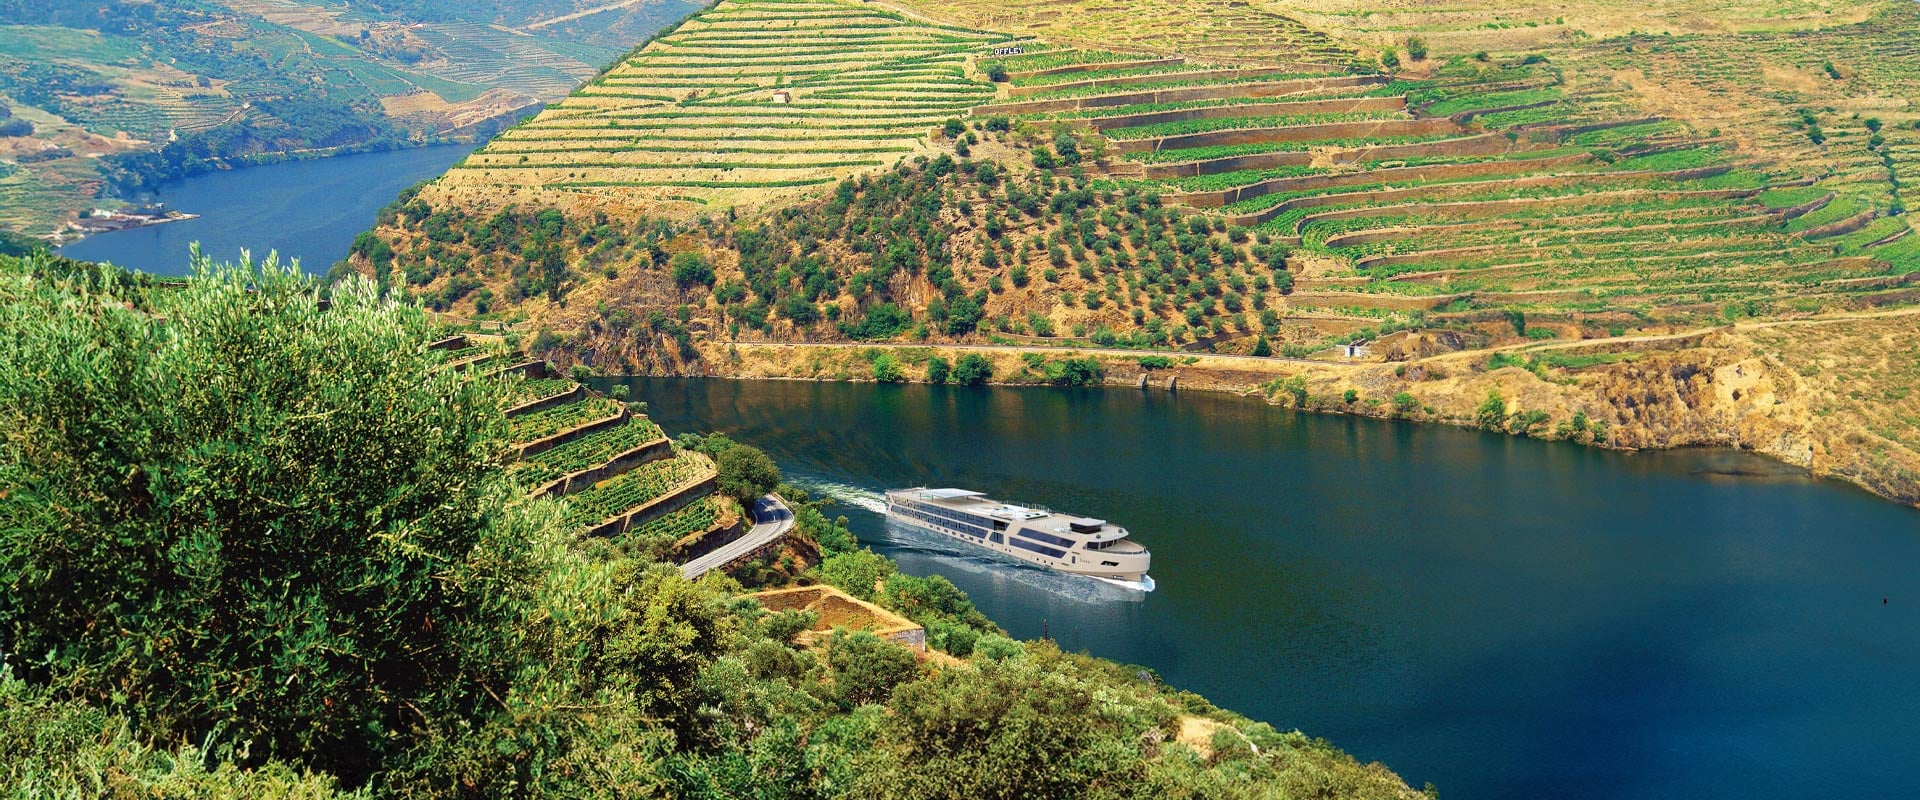 Artist impression of Estrela sailing in the Douro river